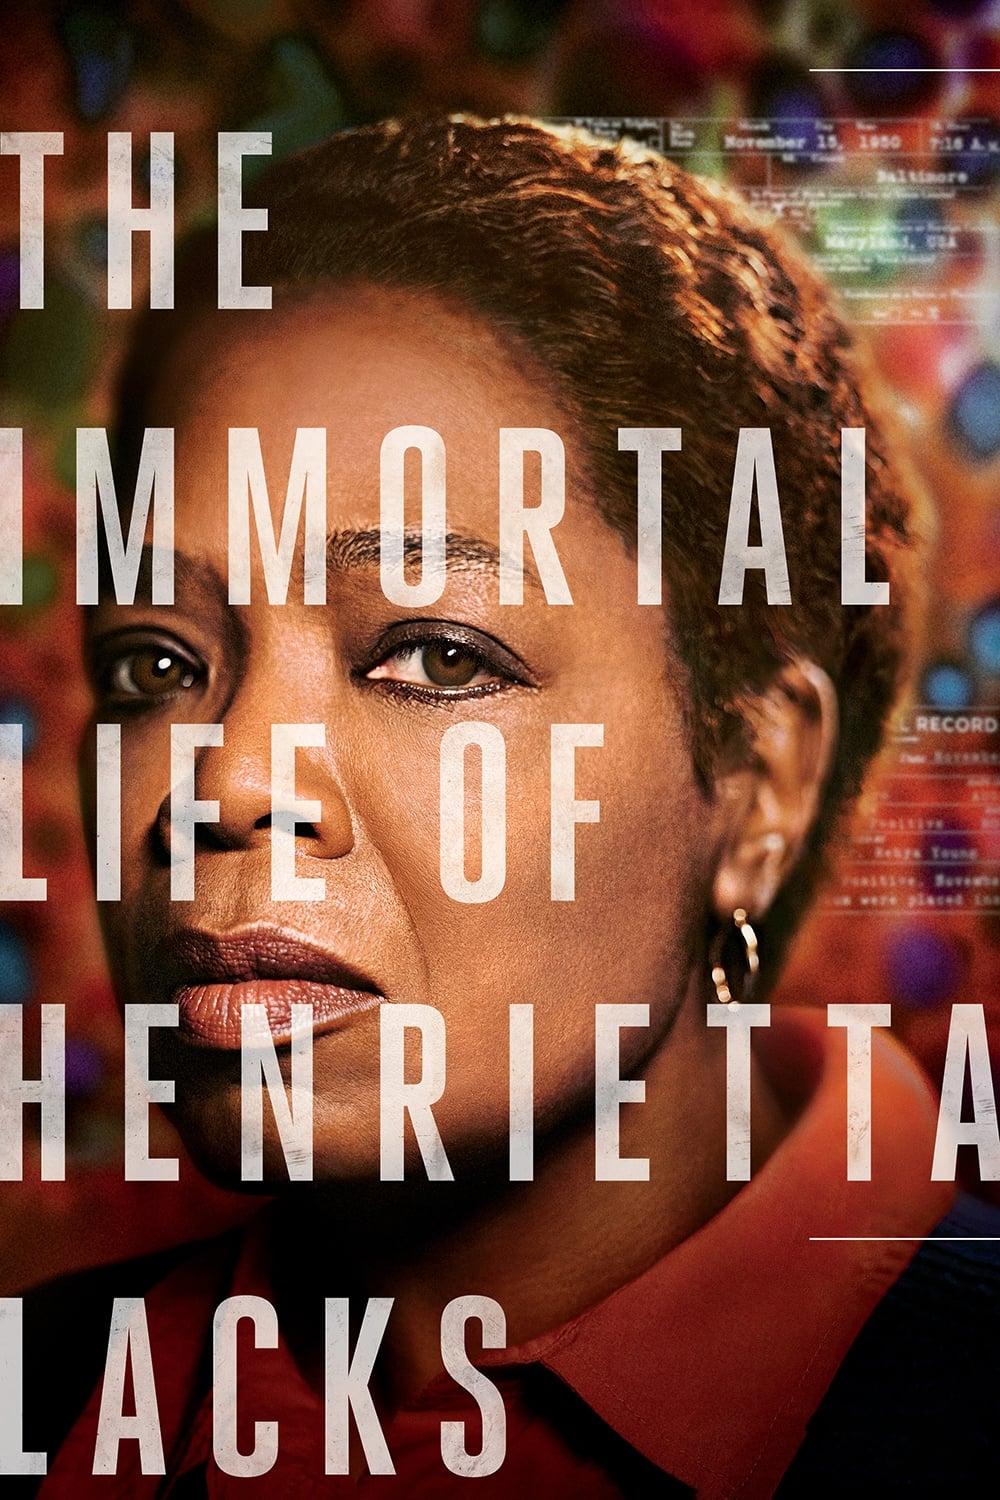 The Immortal Life of Henrietta Lacks poster